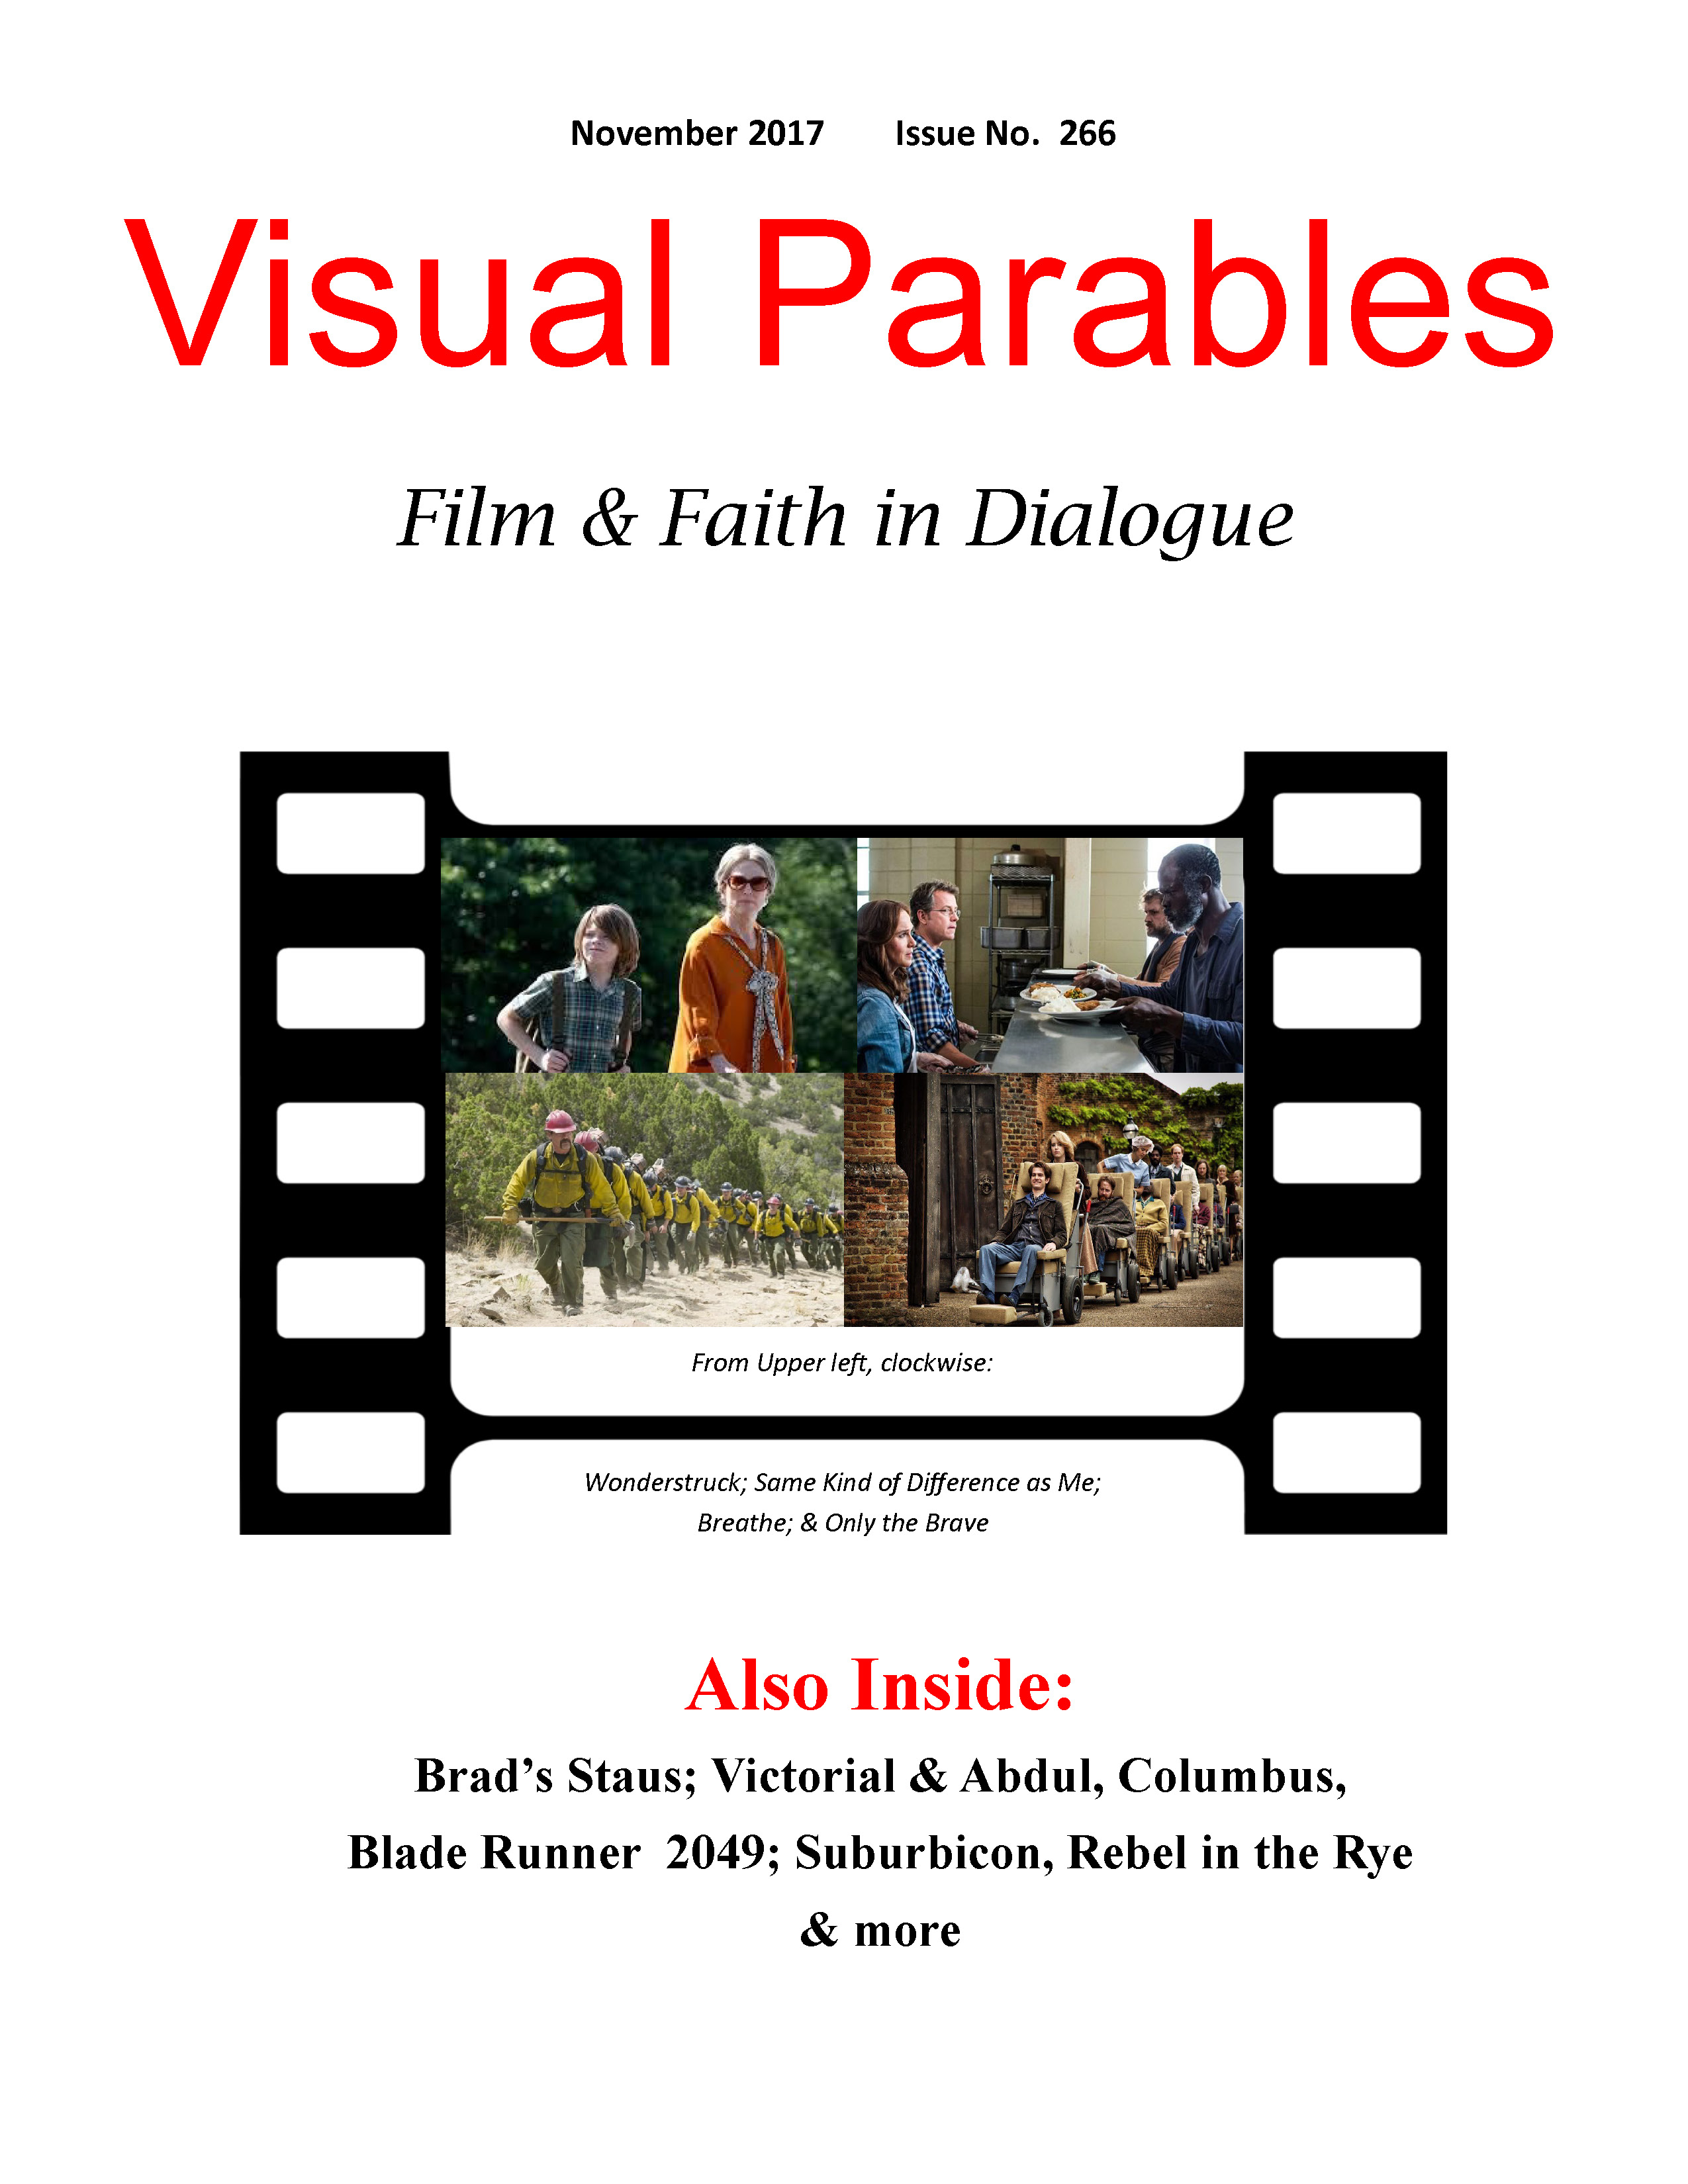 November 2017 issue of Visual Parables